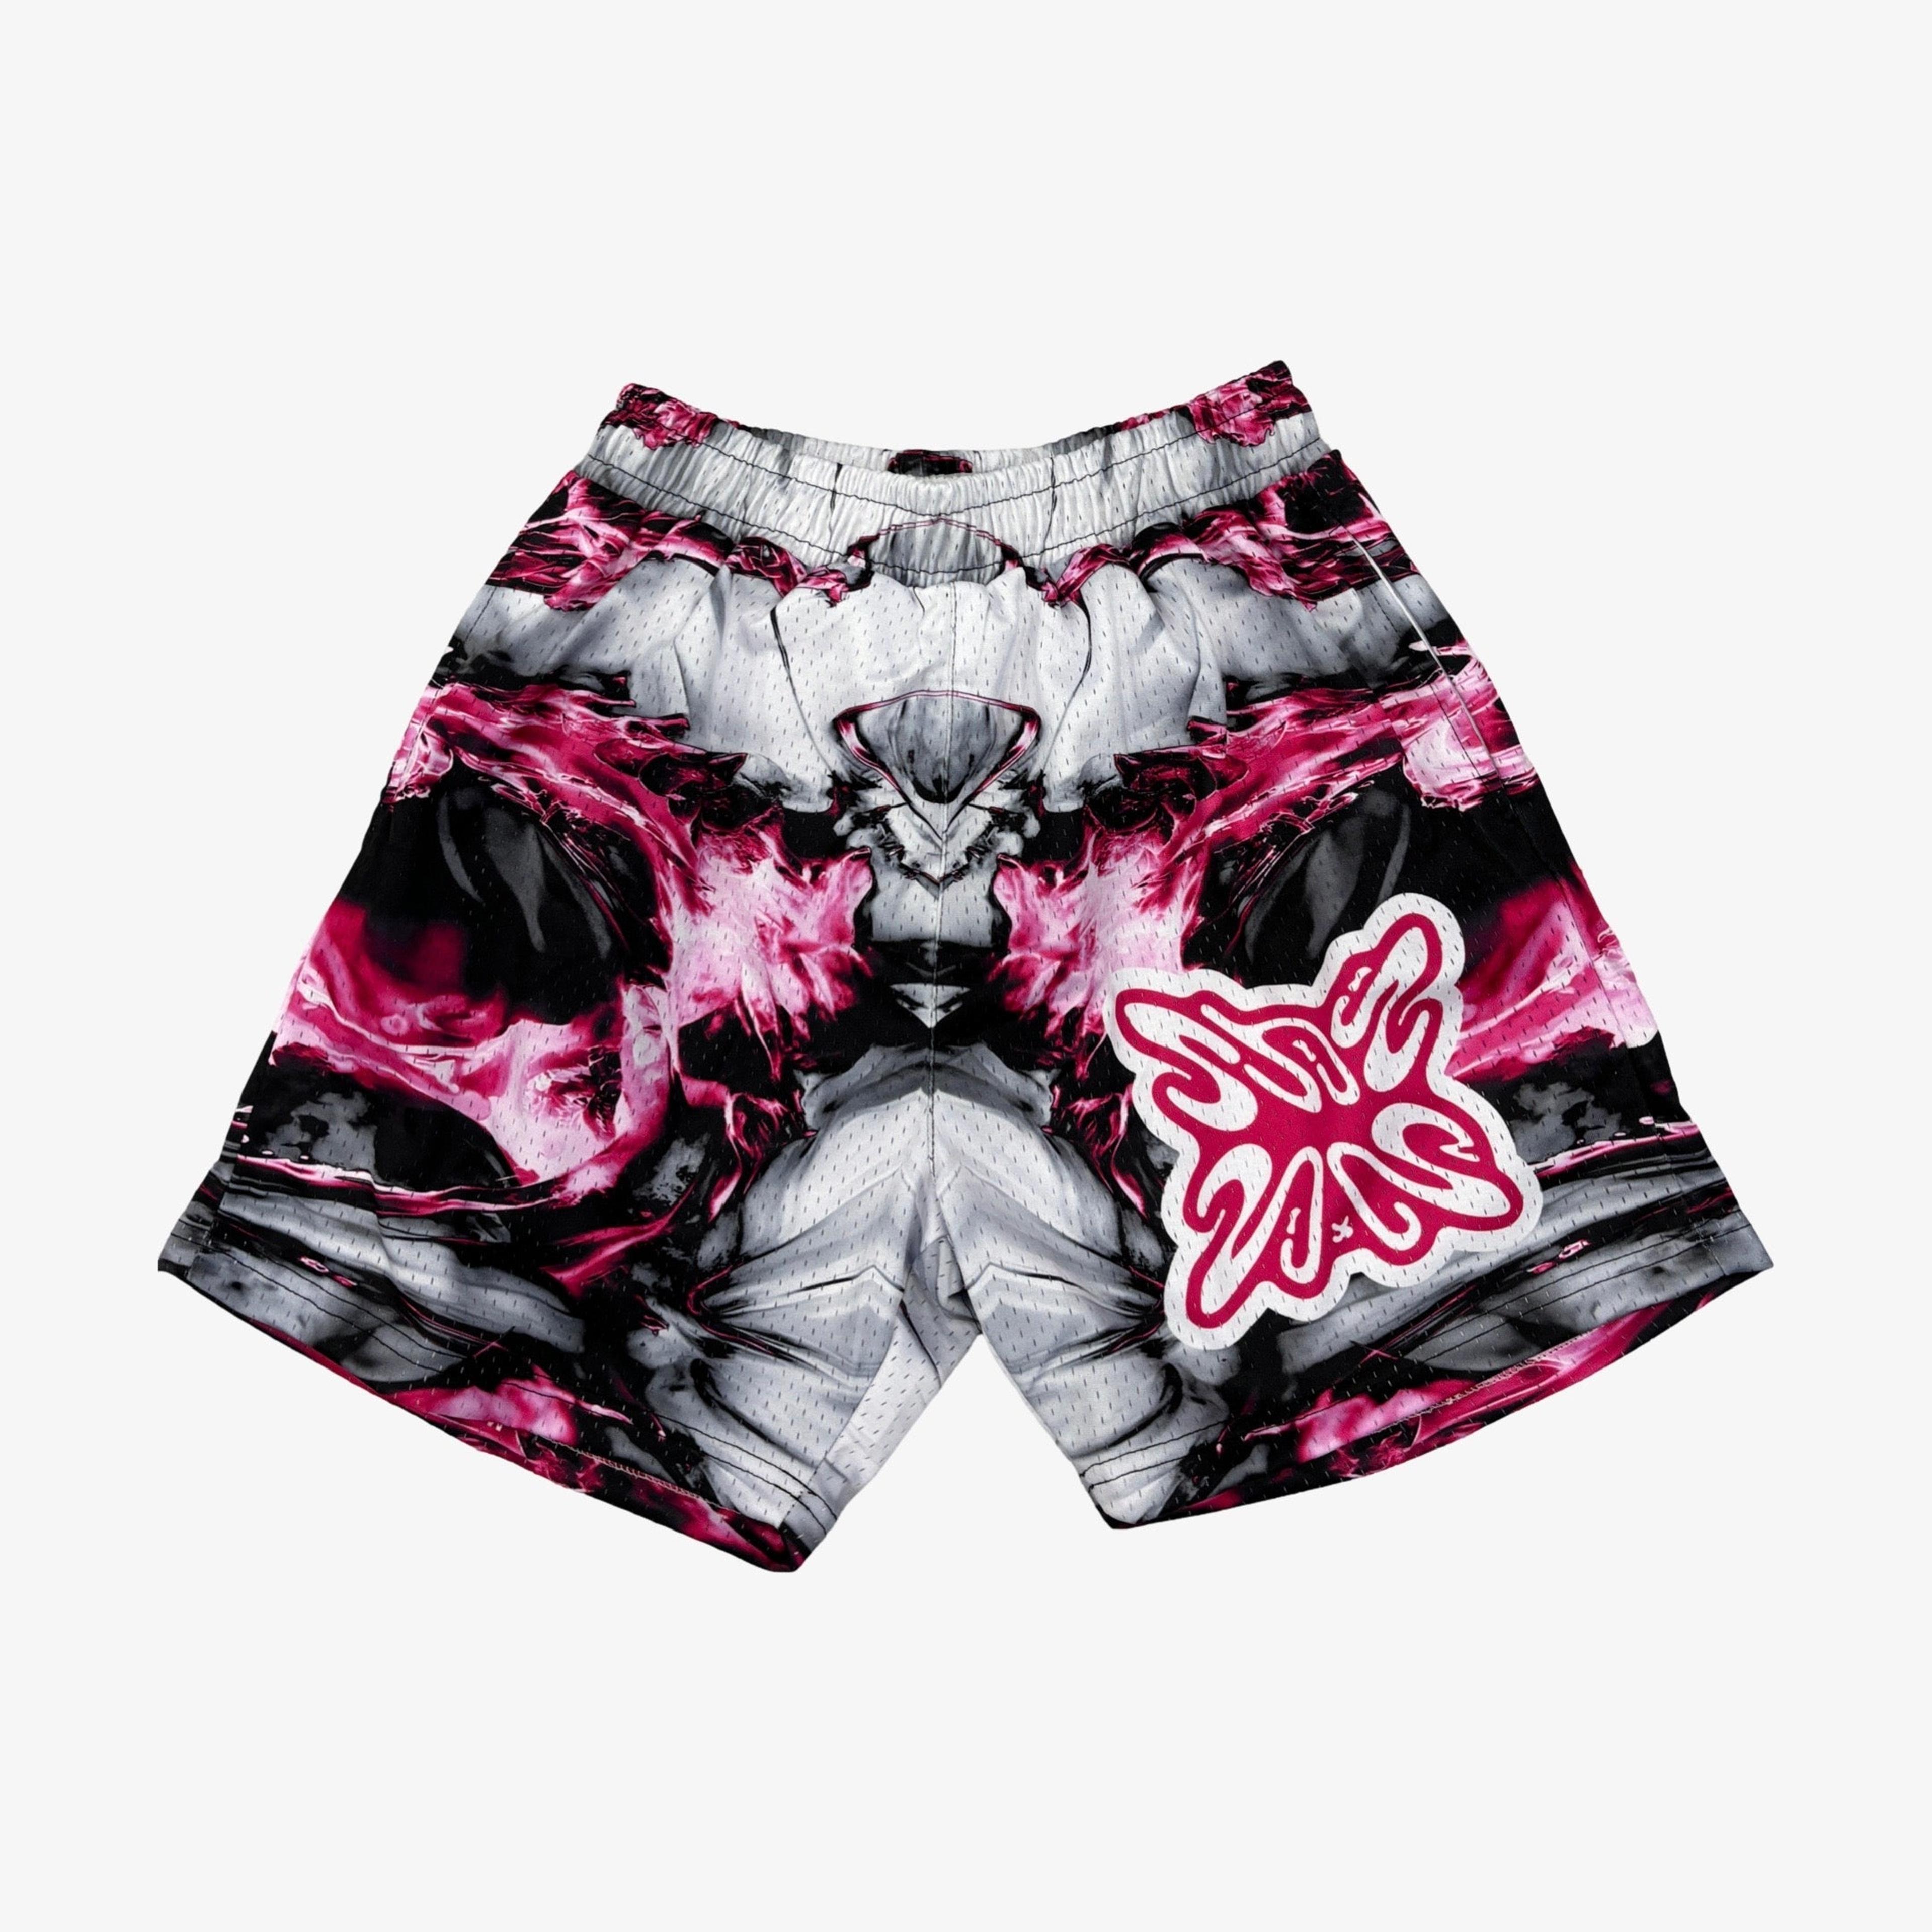 Stainbandz V3 Mesh Shorts 'SB Studios Multi-Color' Pink / Black